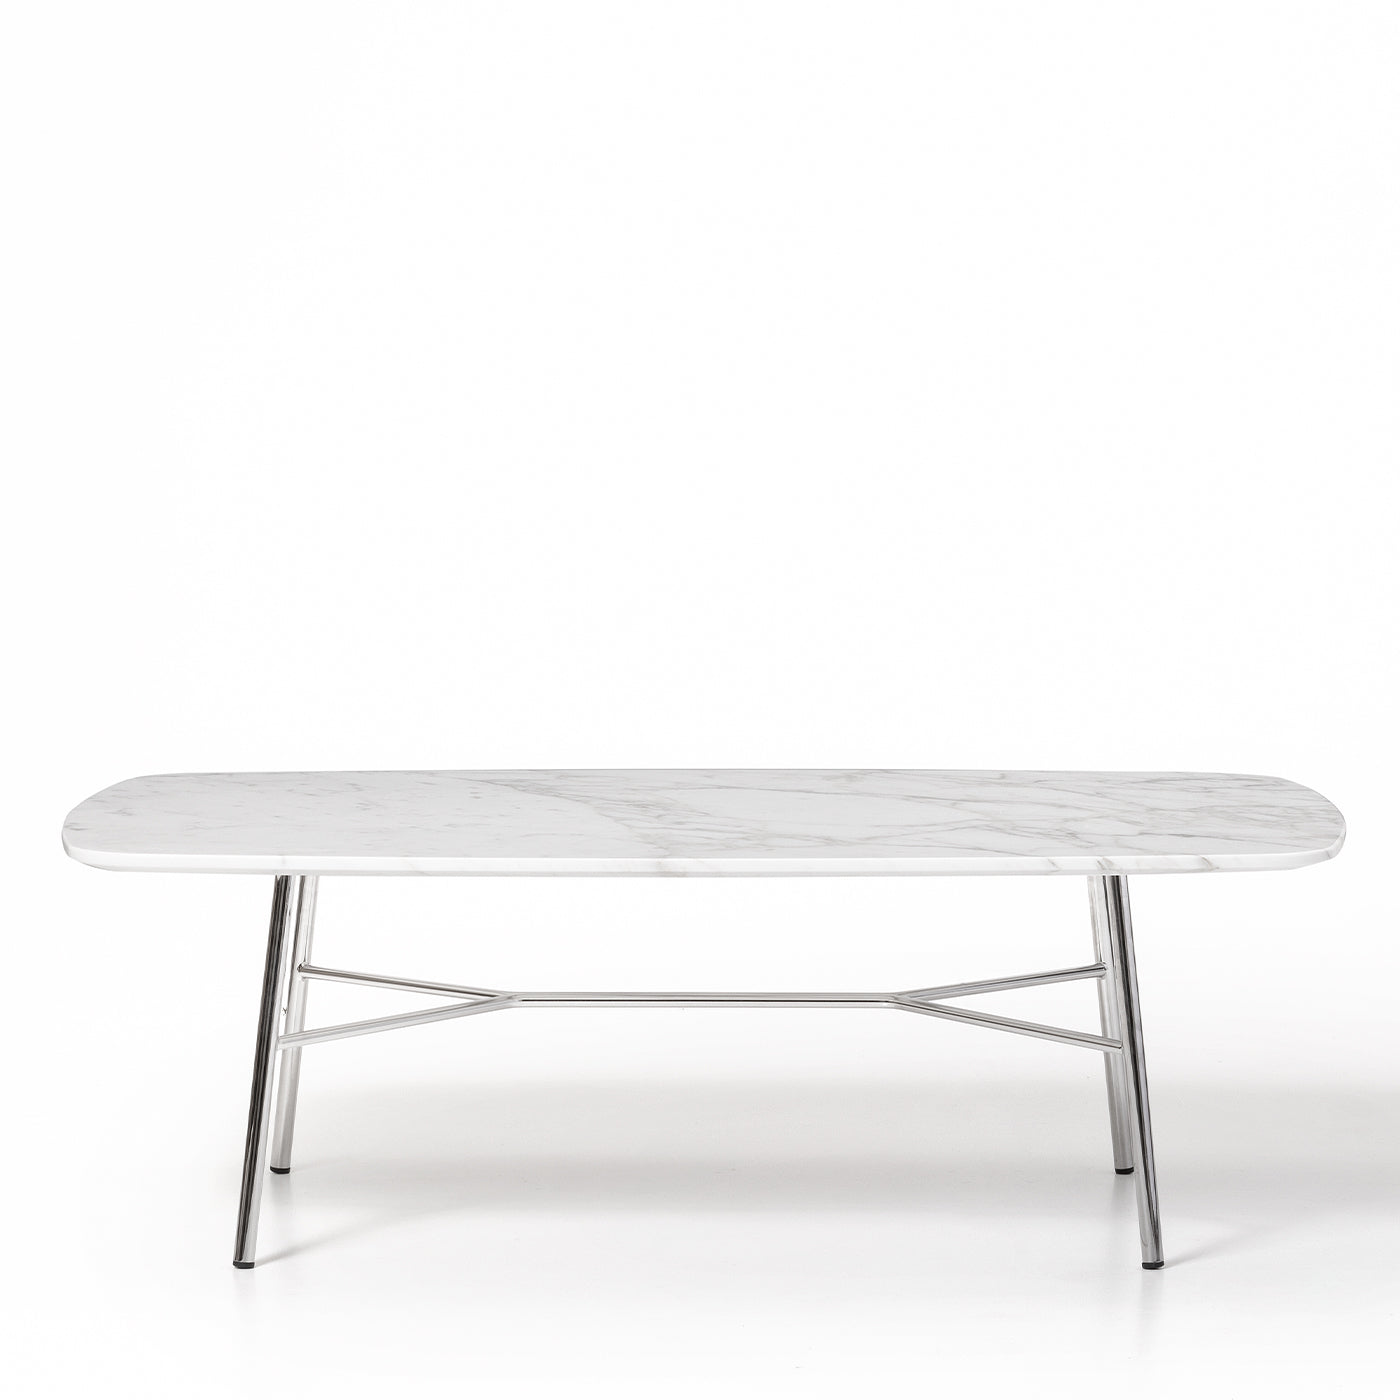 0128/S Yuki Coffee Table with Carrara Top by Ep Studio - Alternative view 1